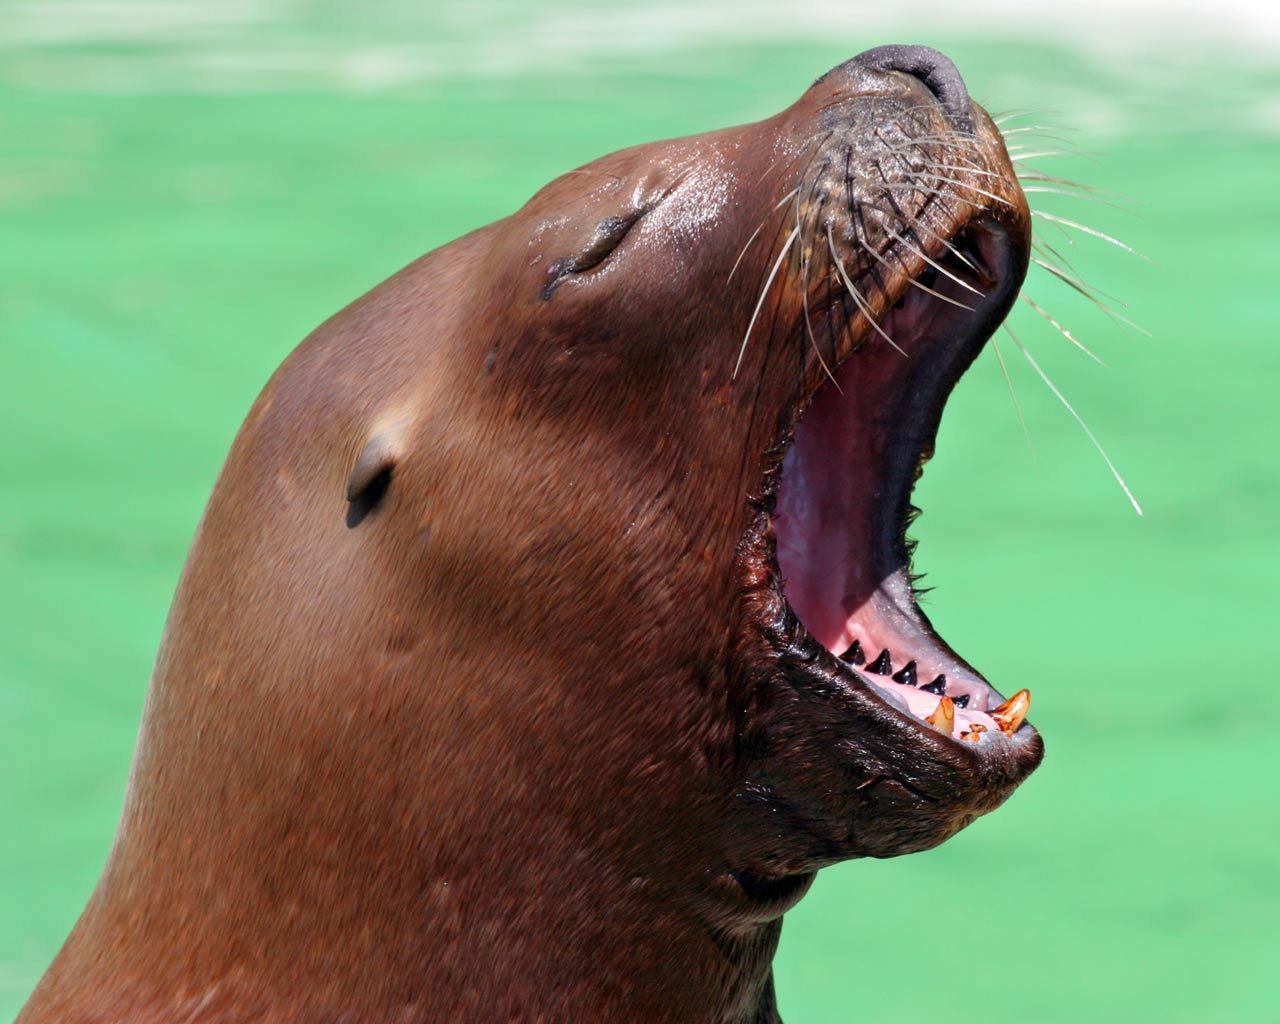 Desktop backgrounds · Animal Life · All Animals Sea Lion Yawn